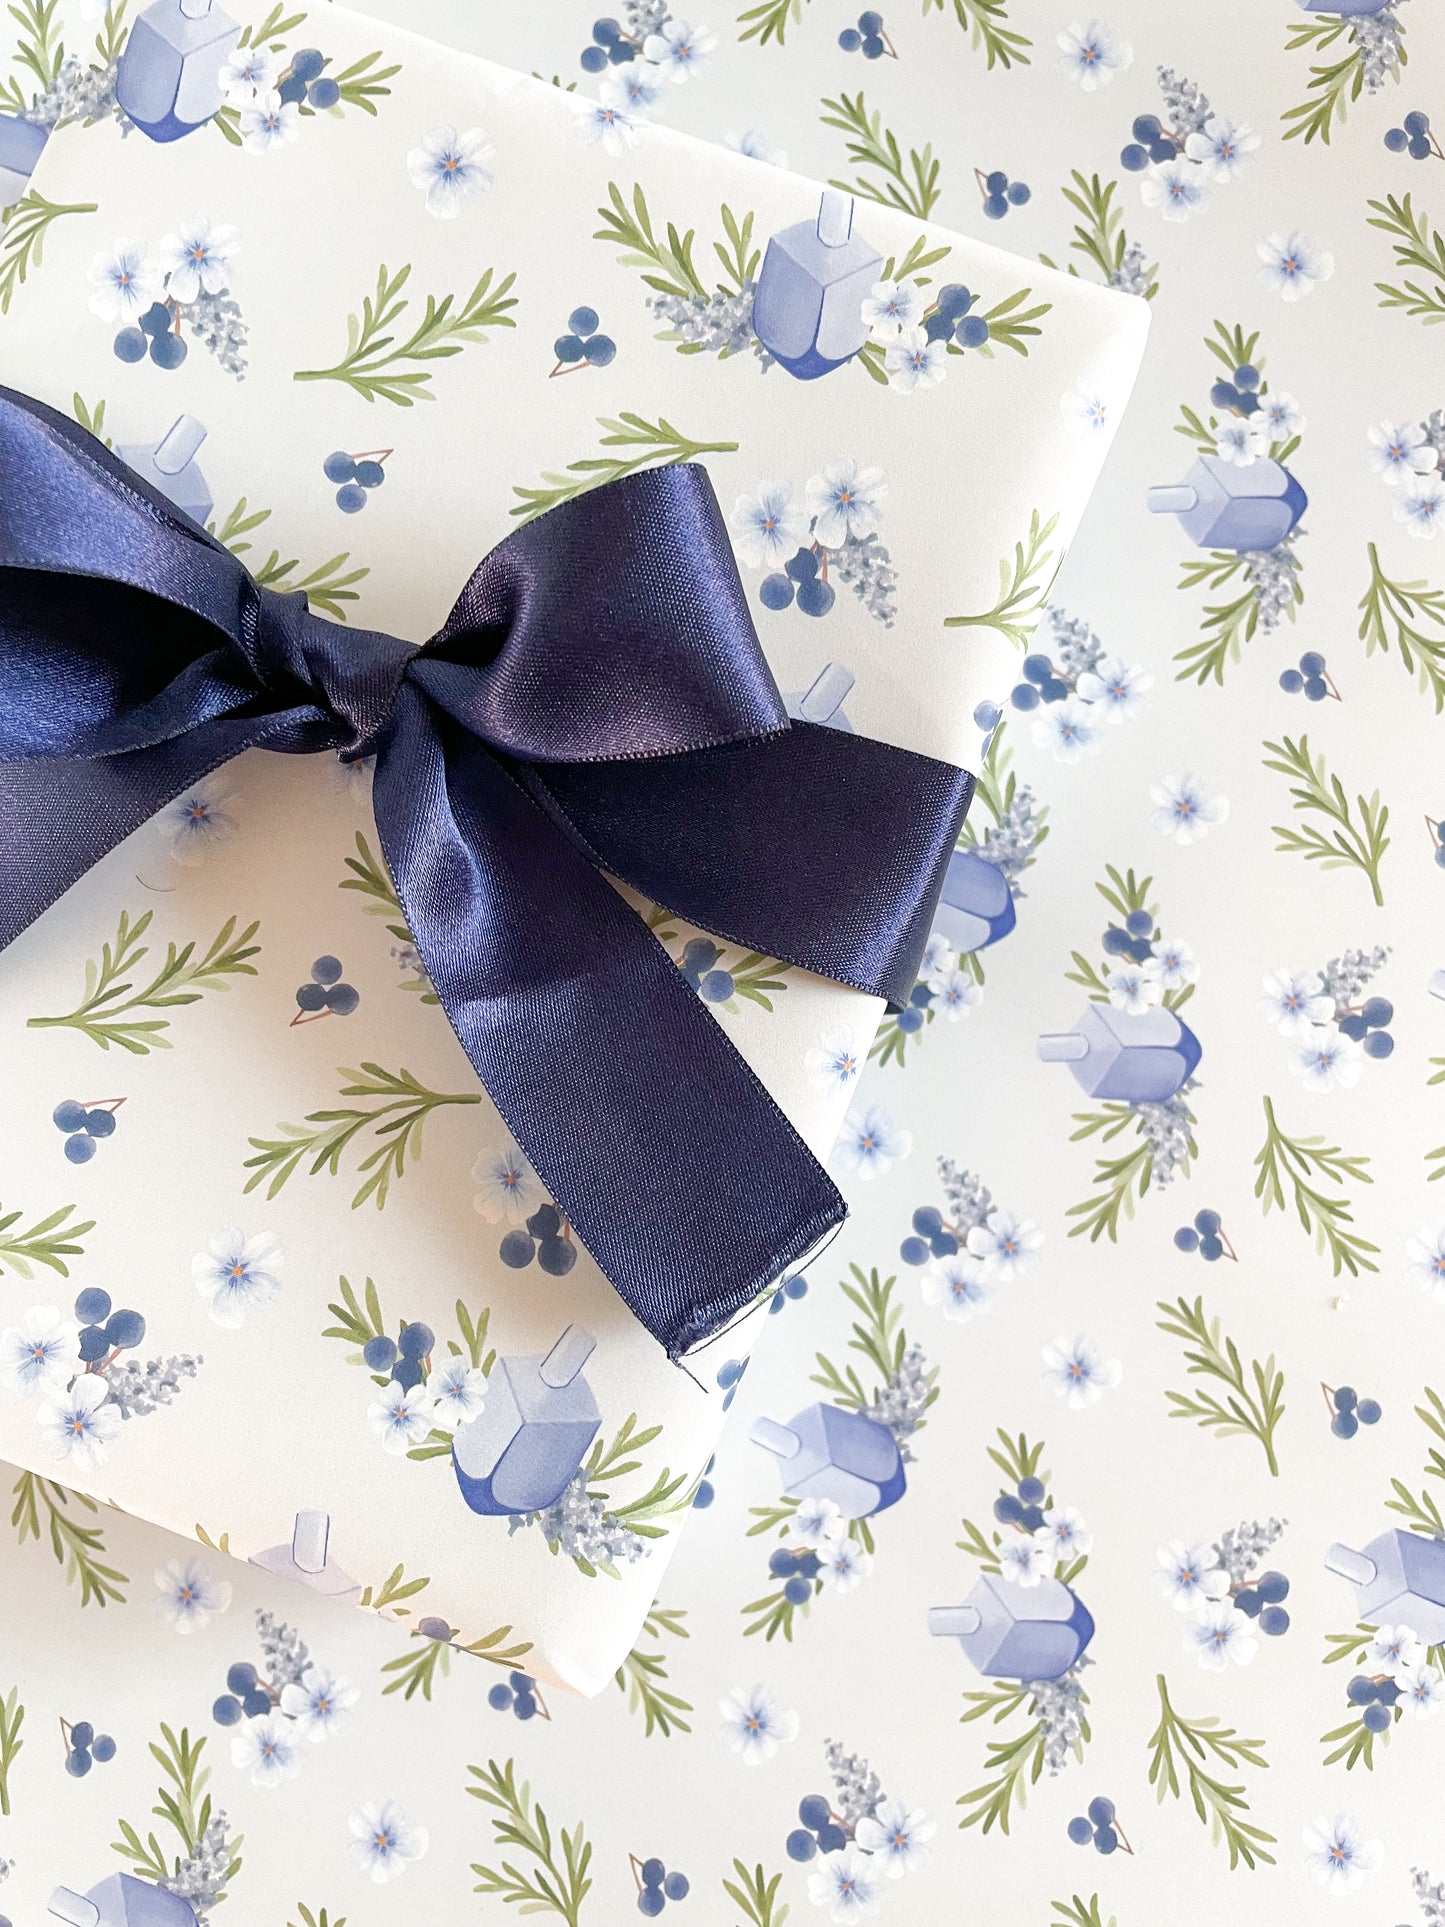 Floral Dreidel Holiday Gift Wrap